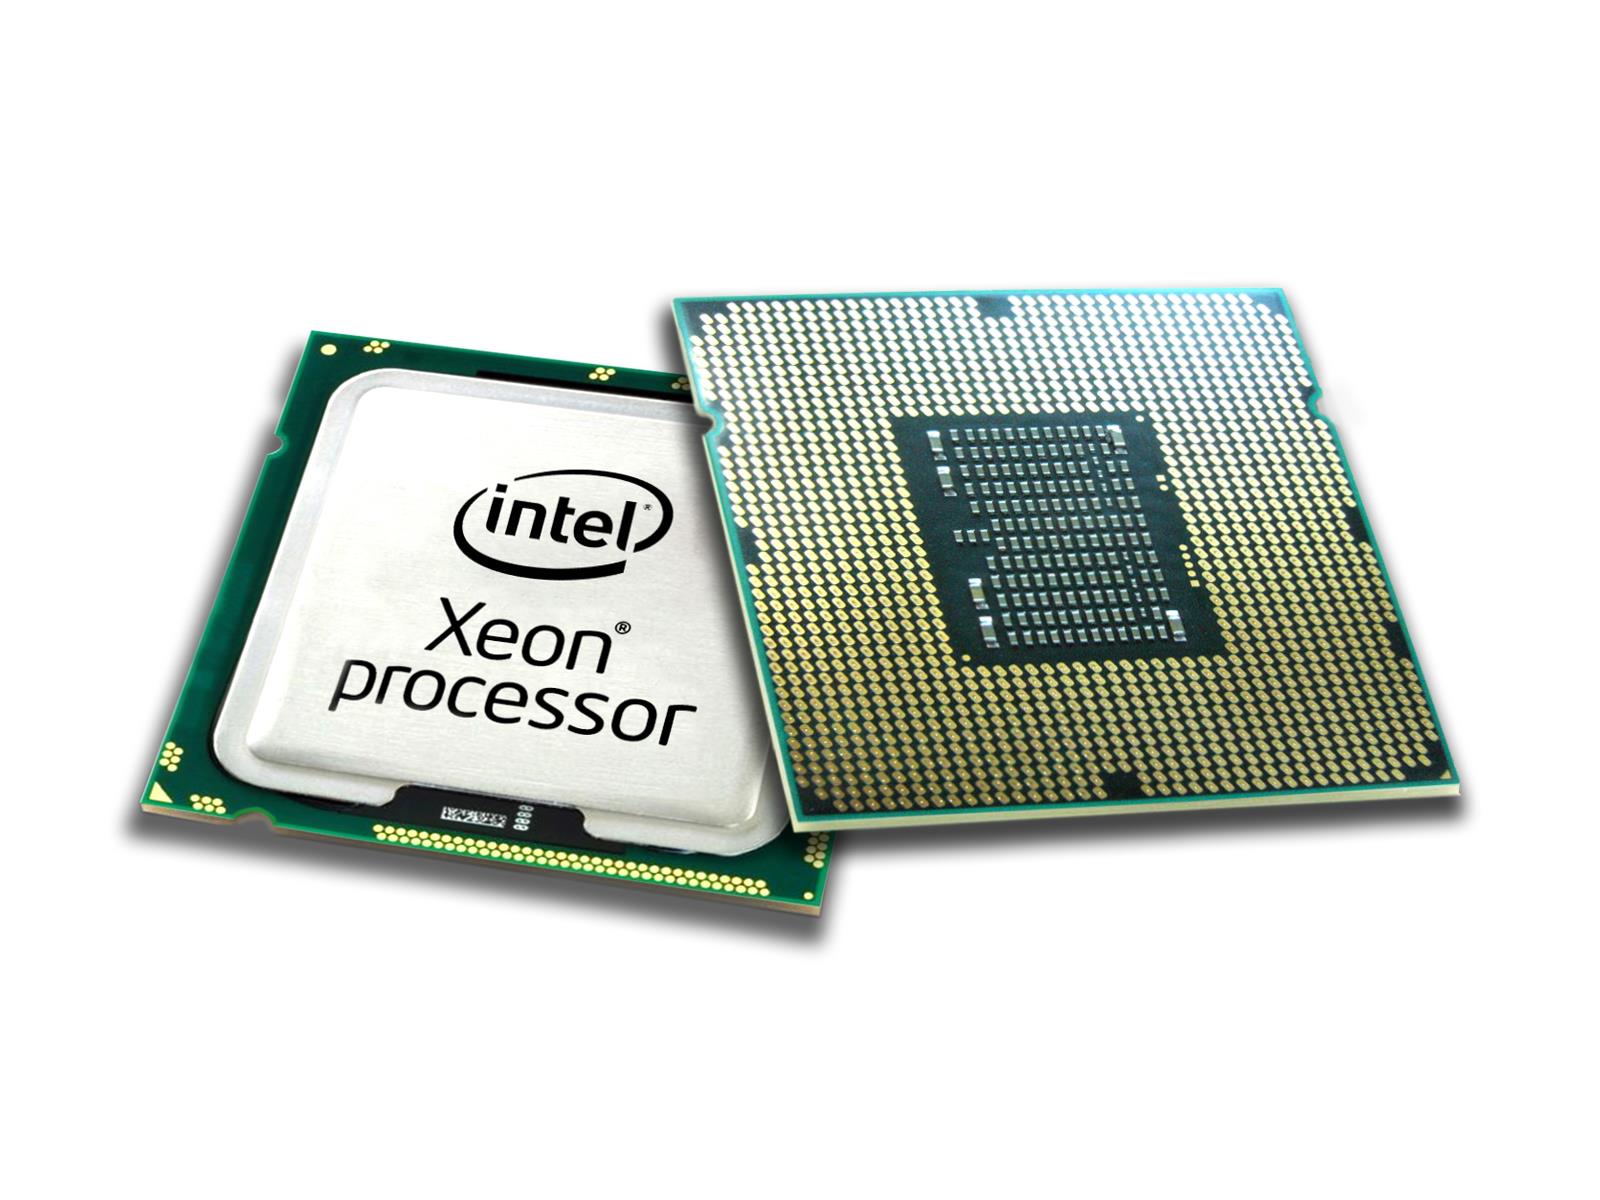 Intel Xeon E5504 cpu